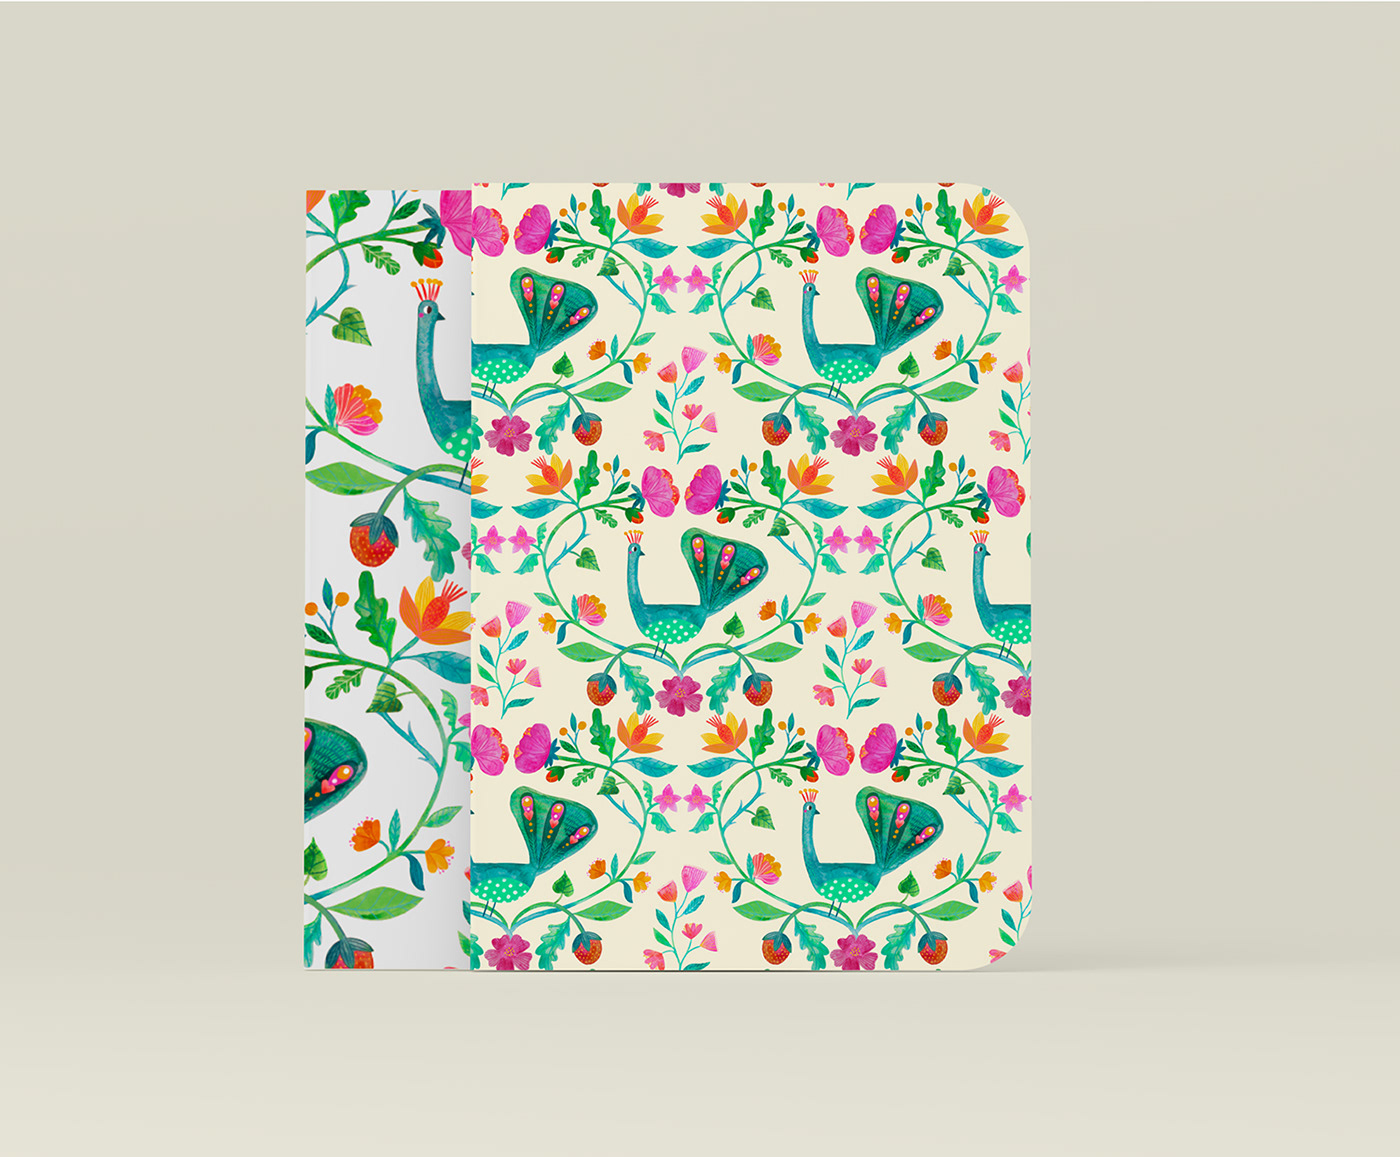 artwork digital illustration watercolor Flowers pattern textile fabric print